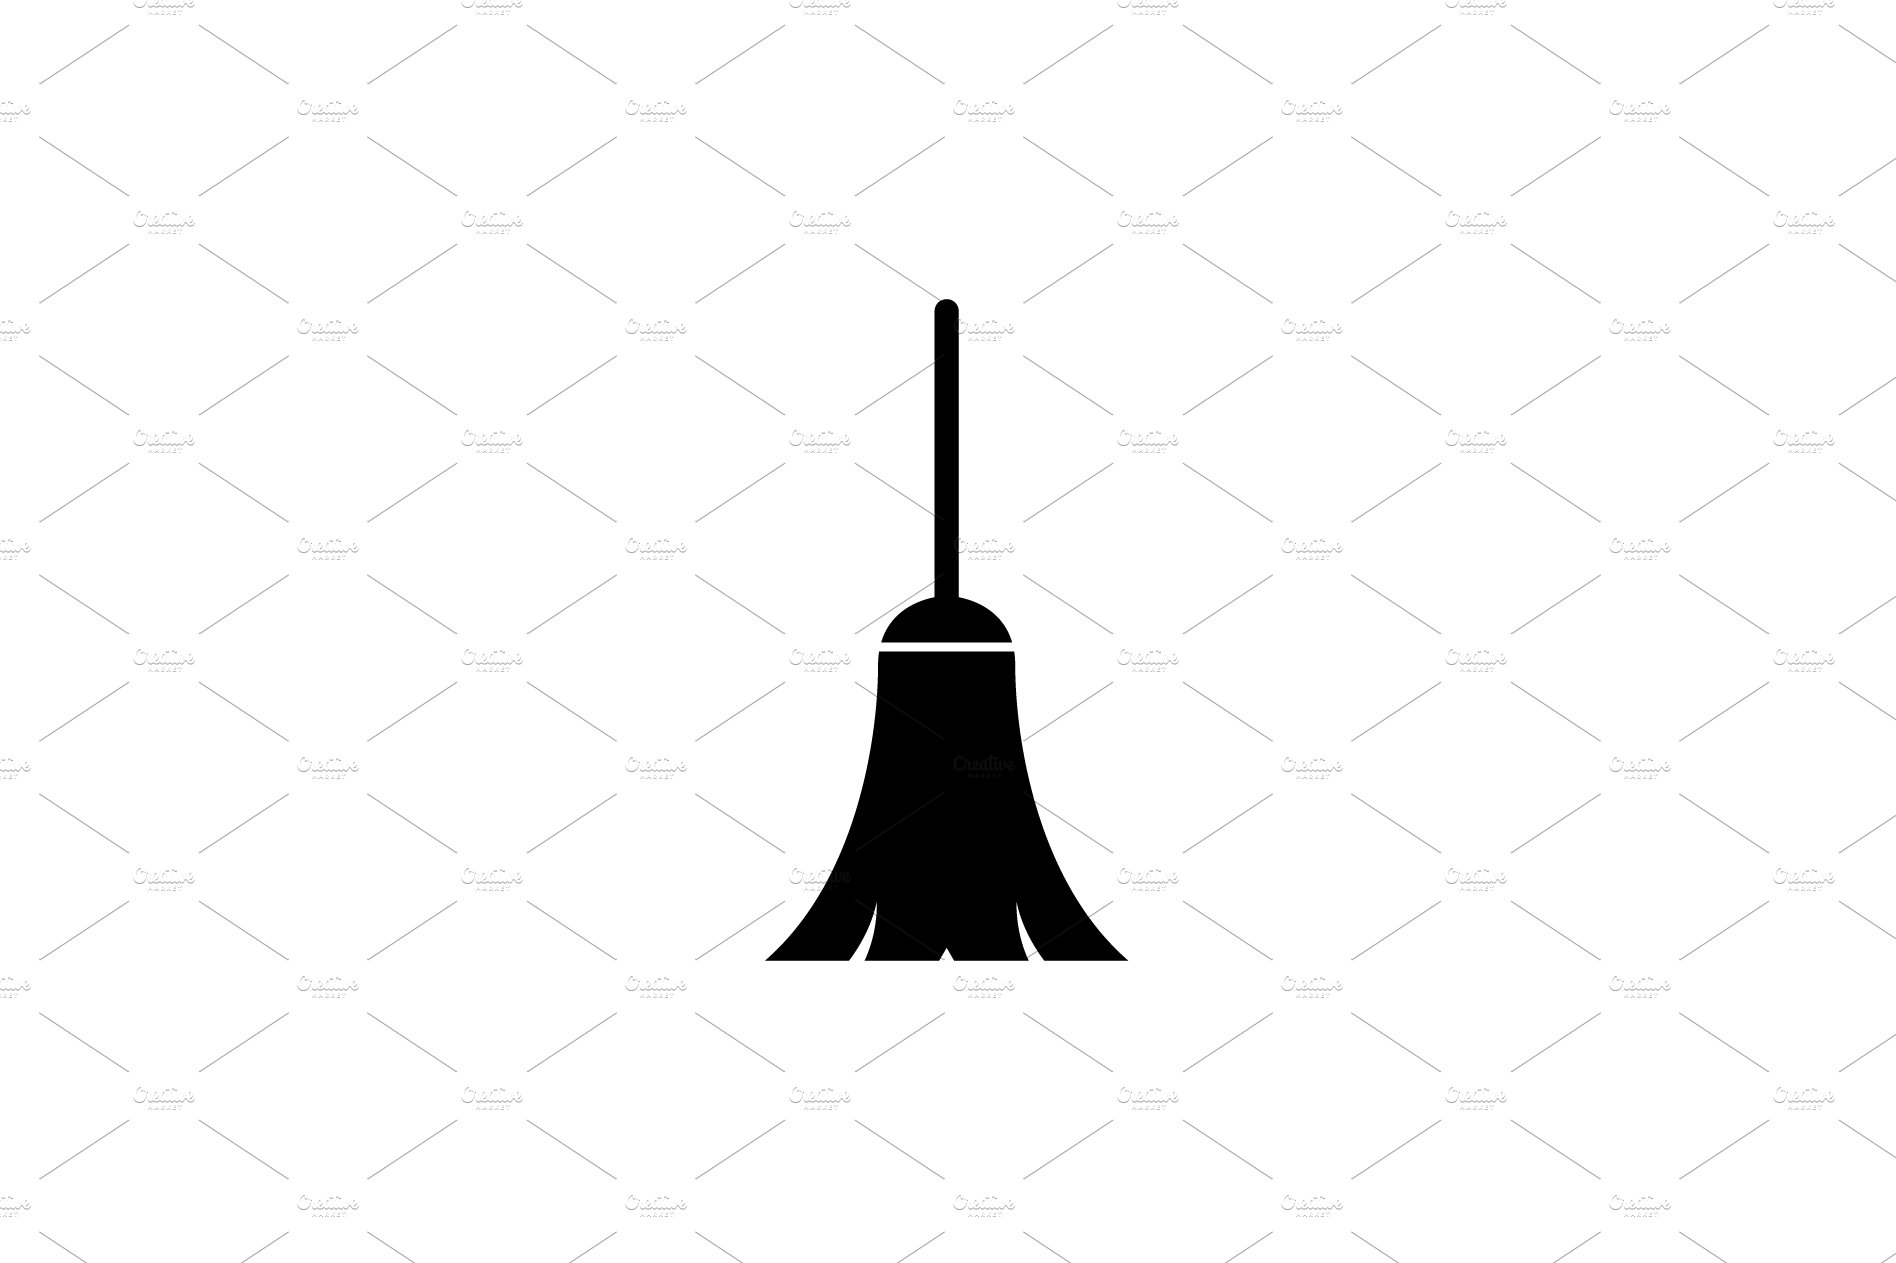 broom icon vector cover image.